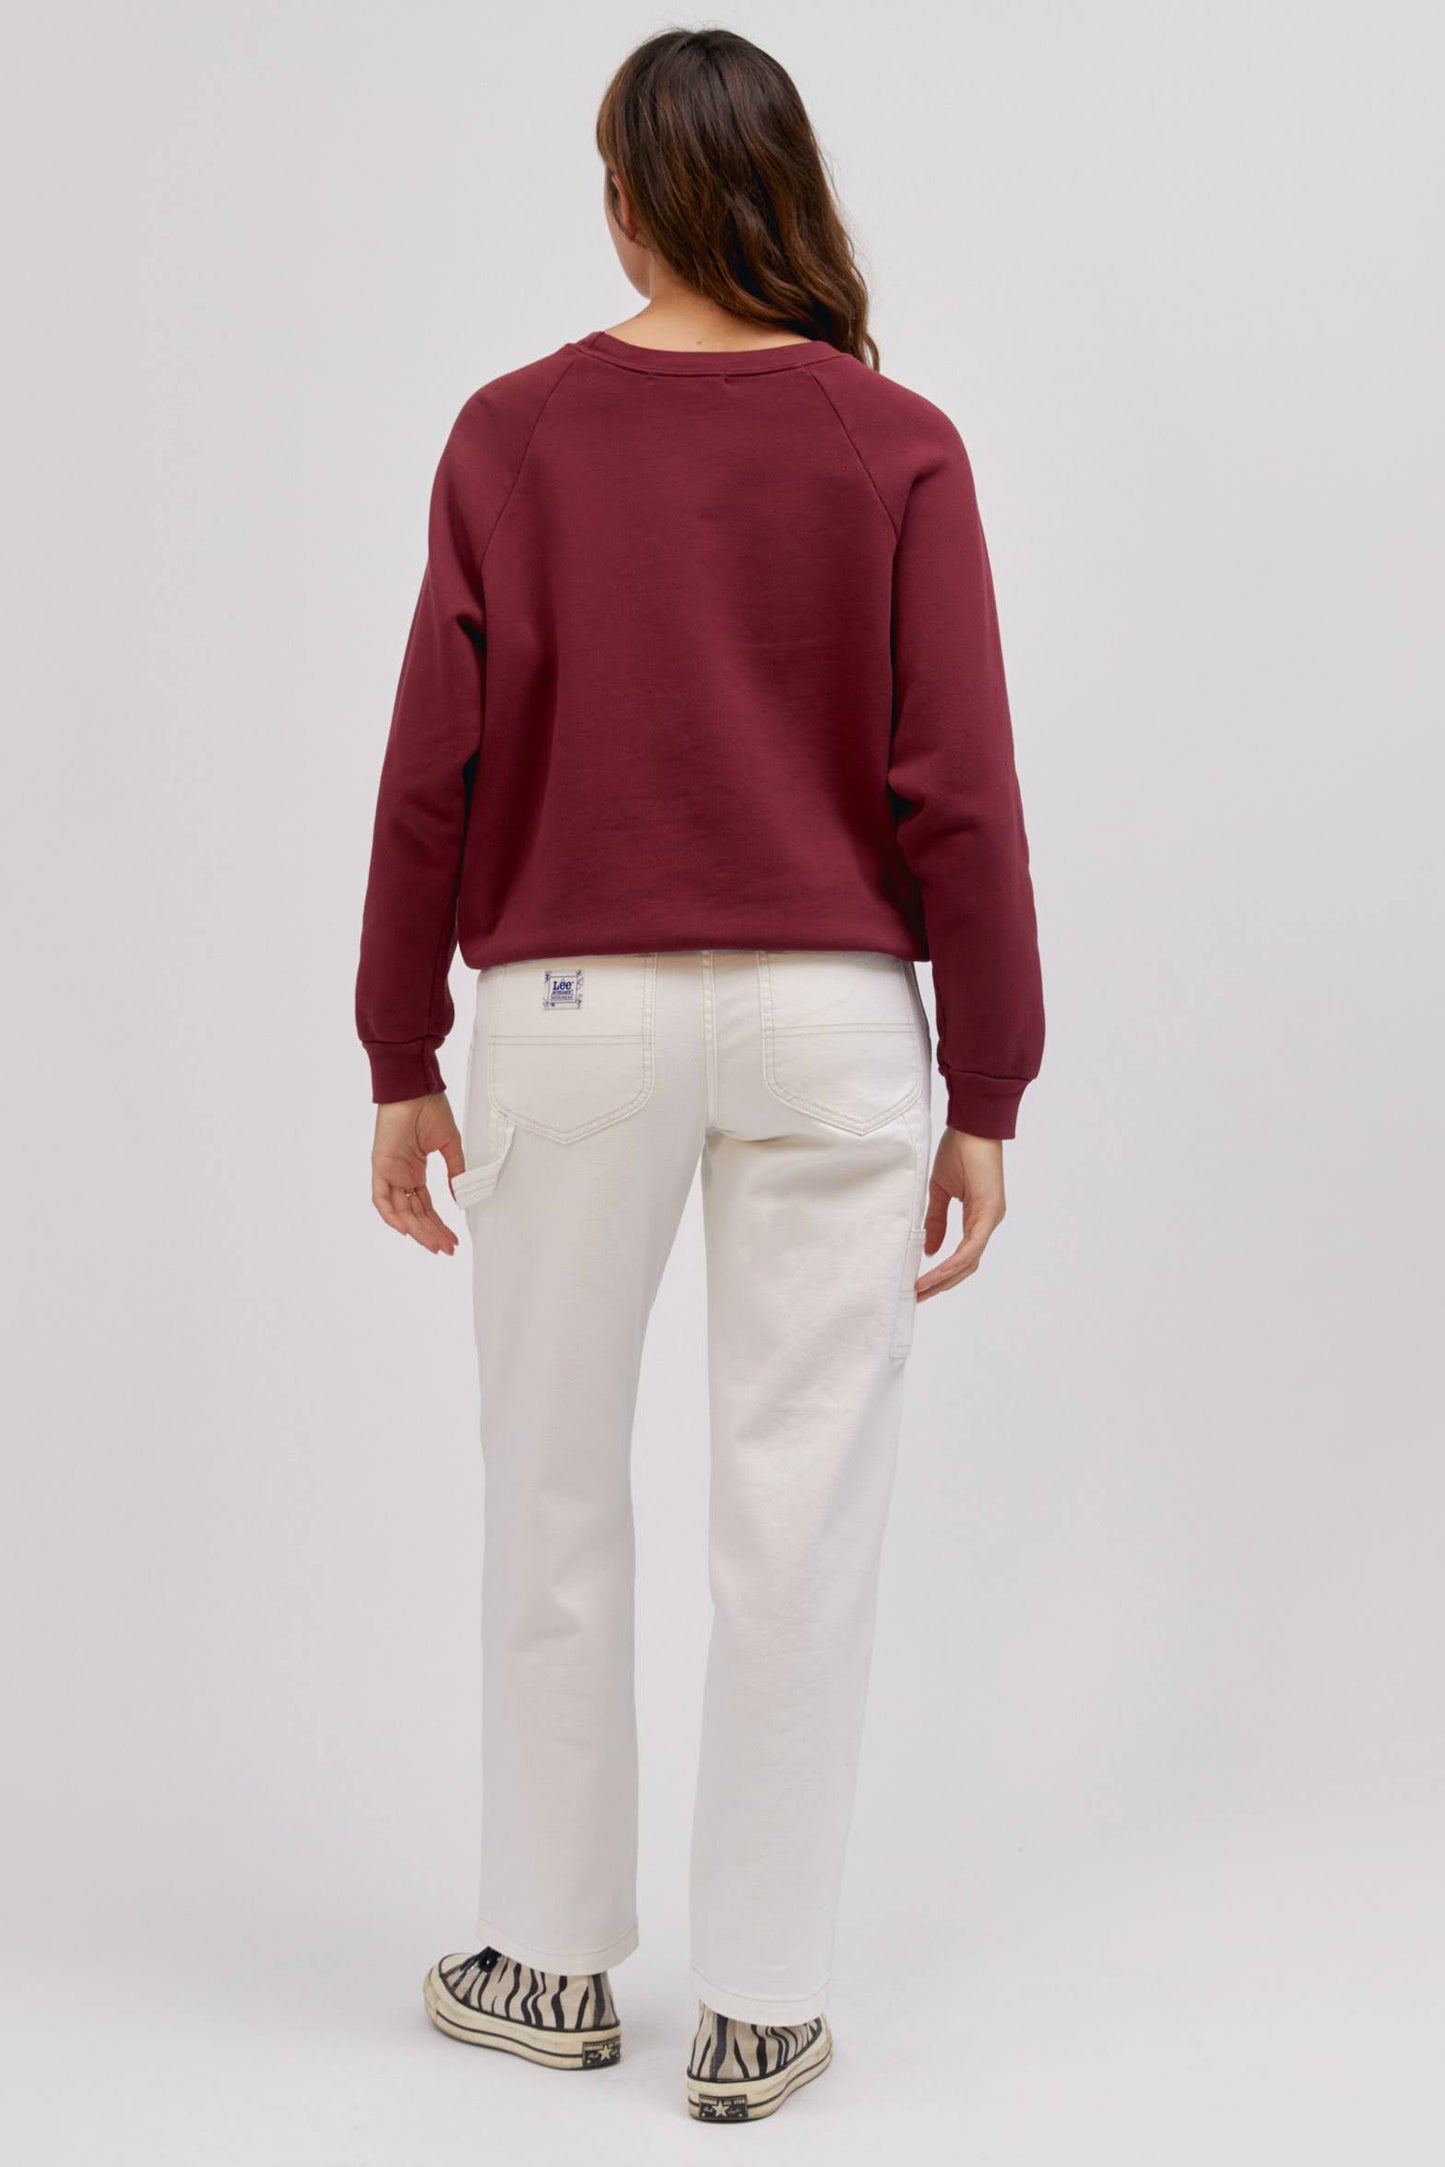 backside of standing model wearing maroon colored sweatshirt and white workwear pants